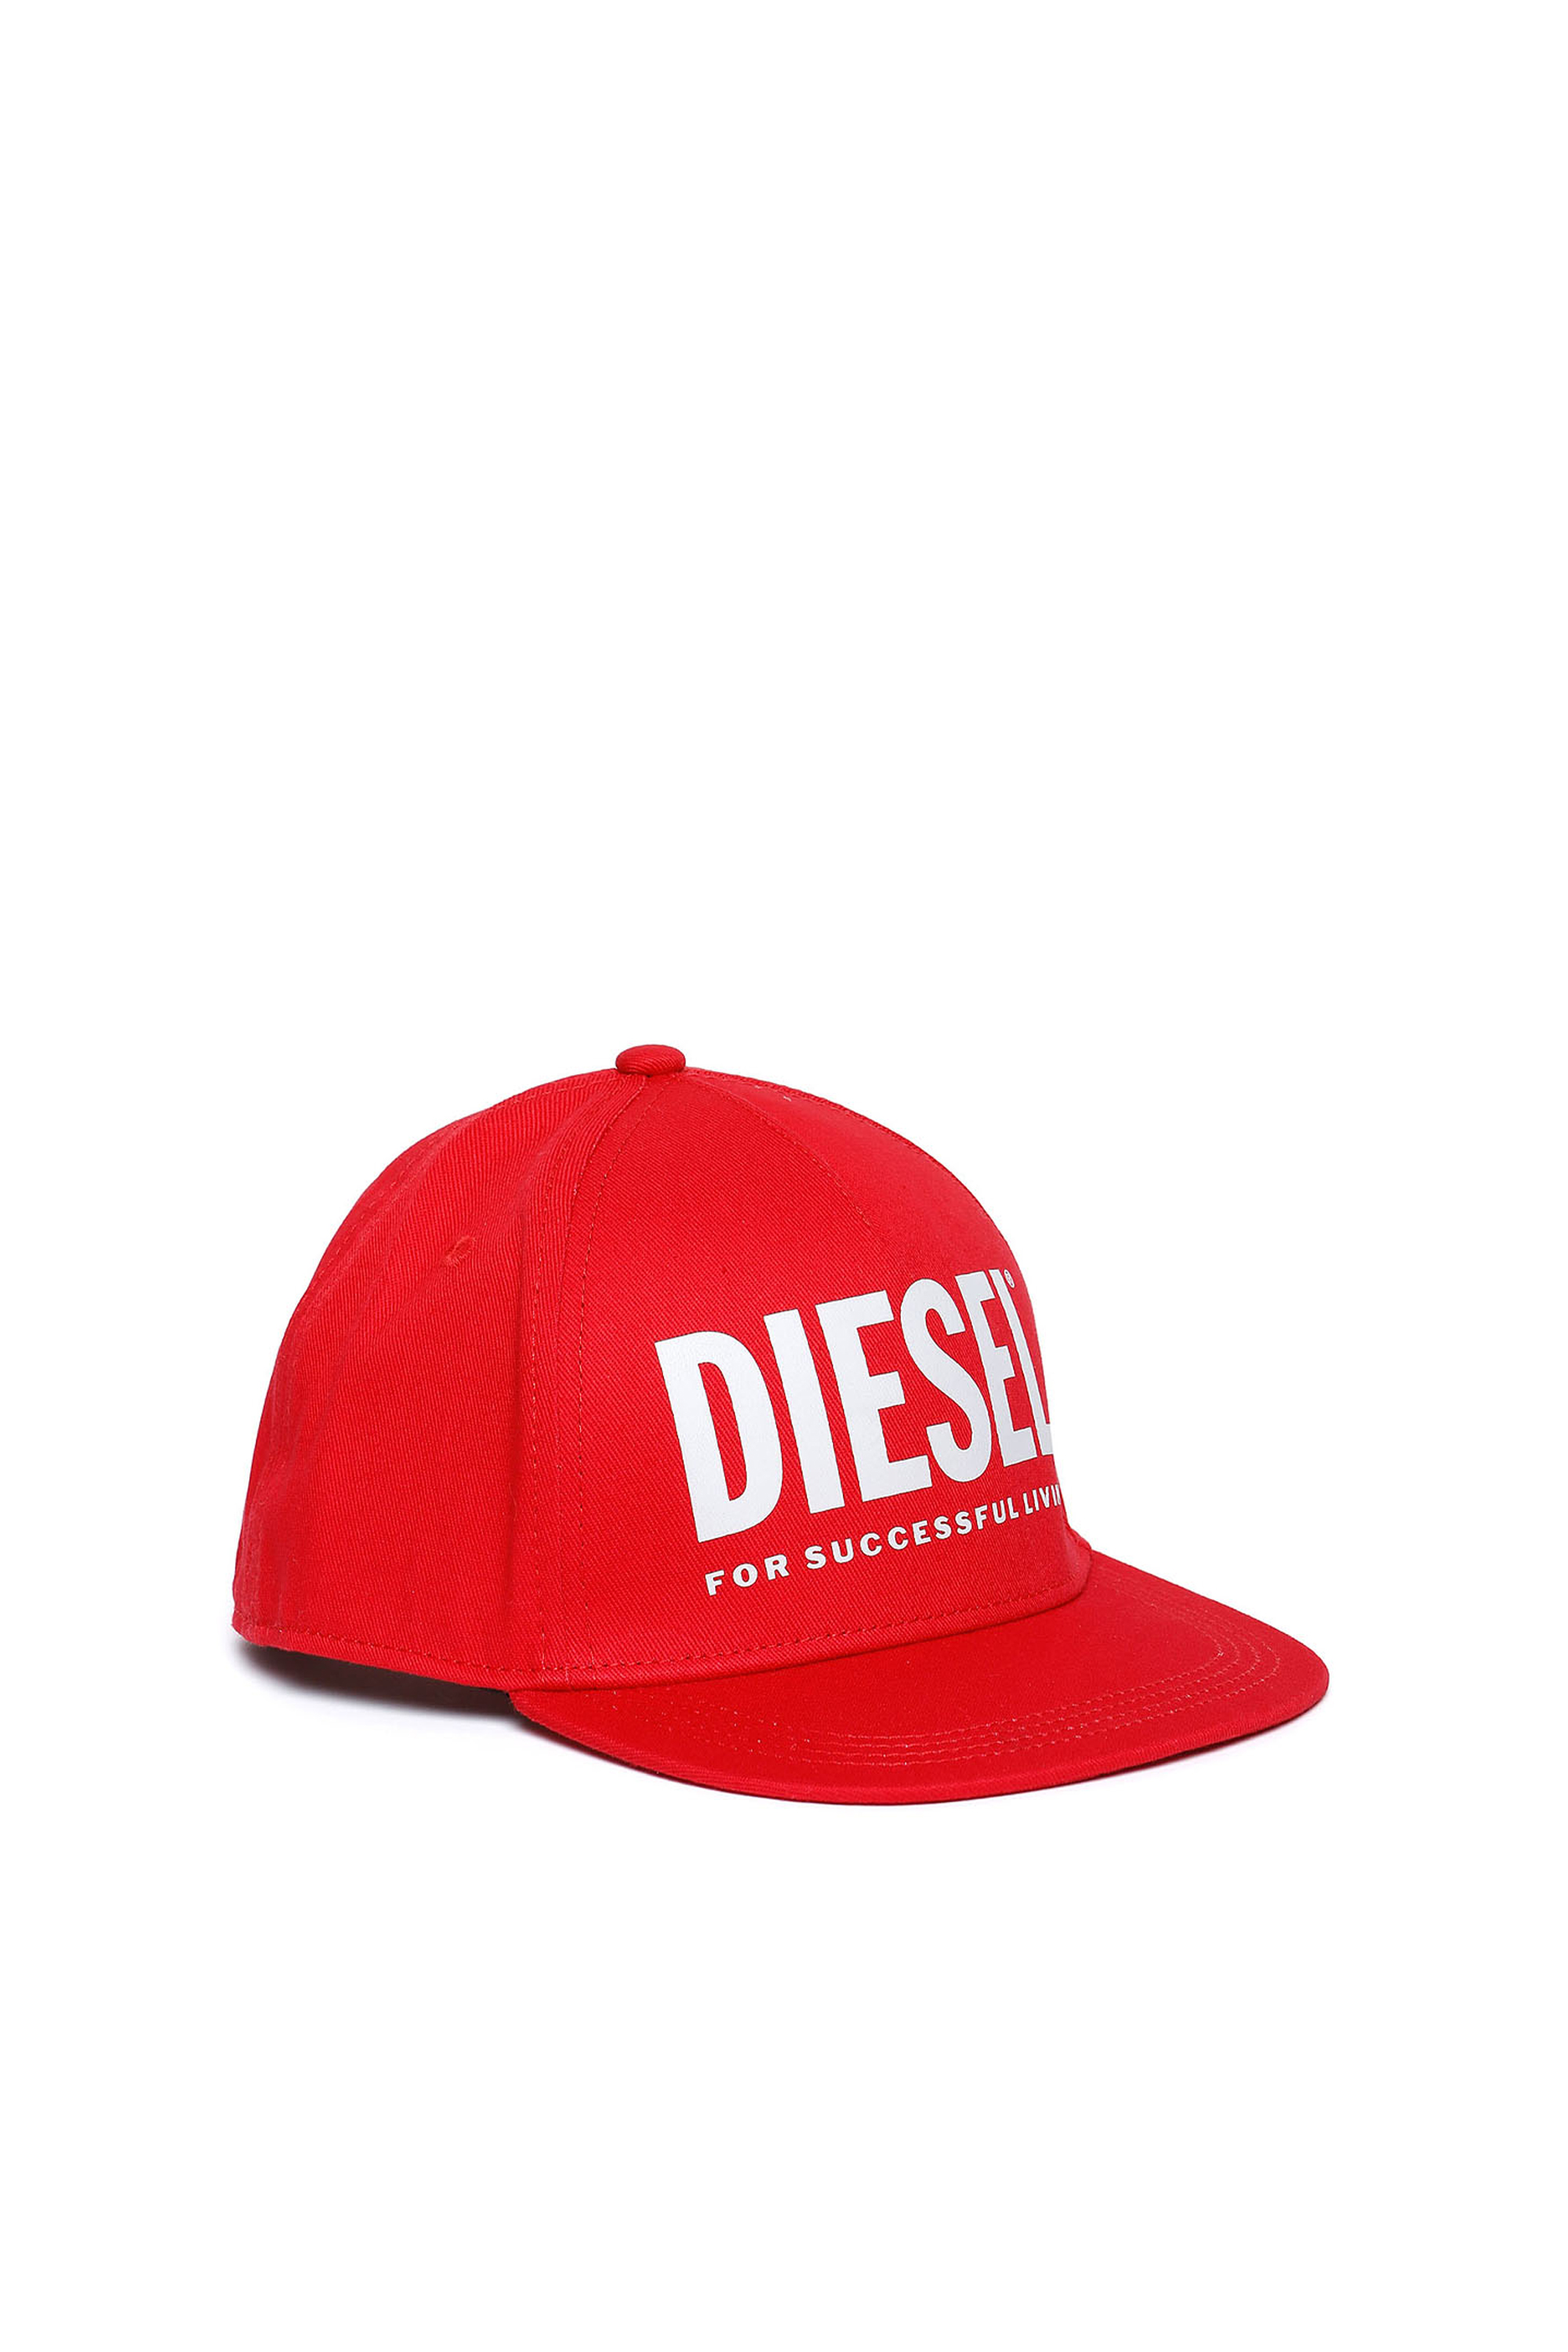 Diesel - FOLLY, Red - Image 1